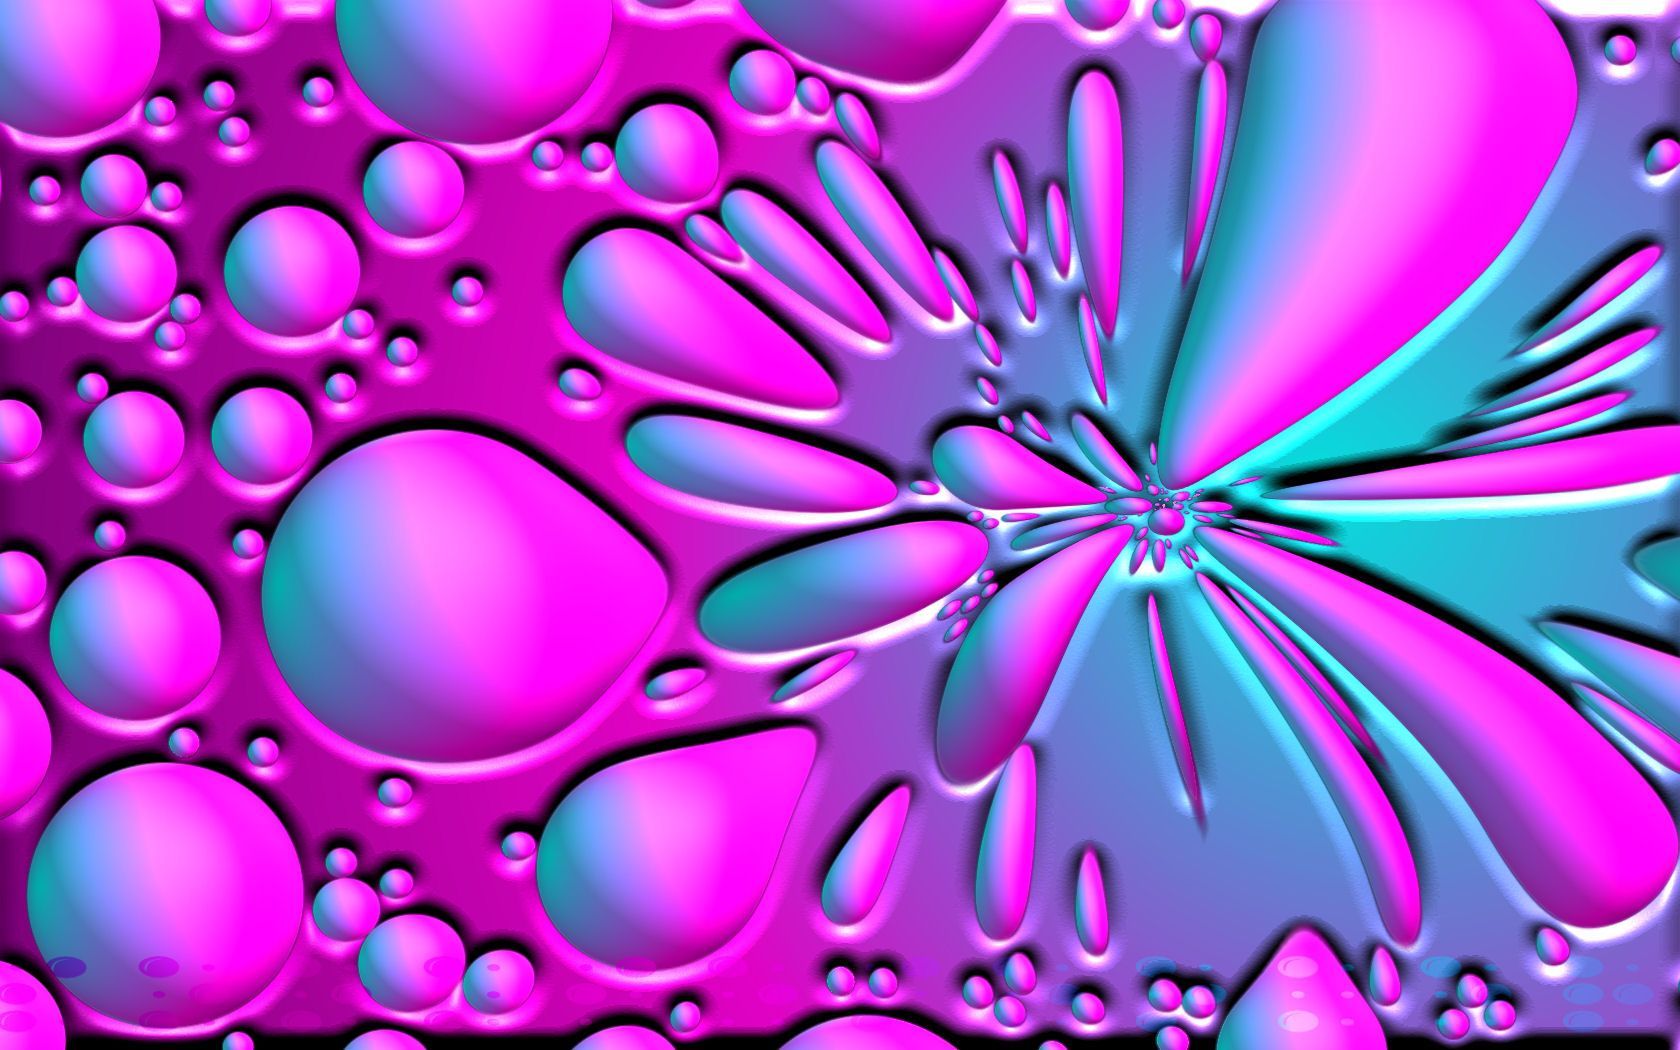 Pink_and_Blue_Bubble. Bubbles wallpaper, Purple flowers wallpaper